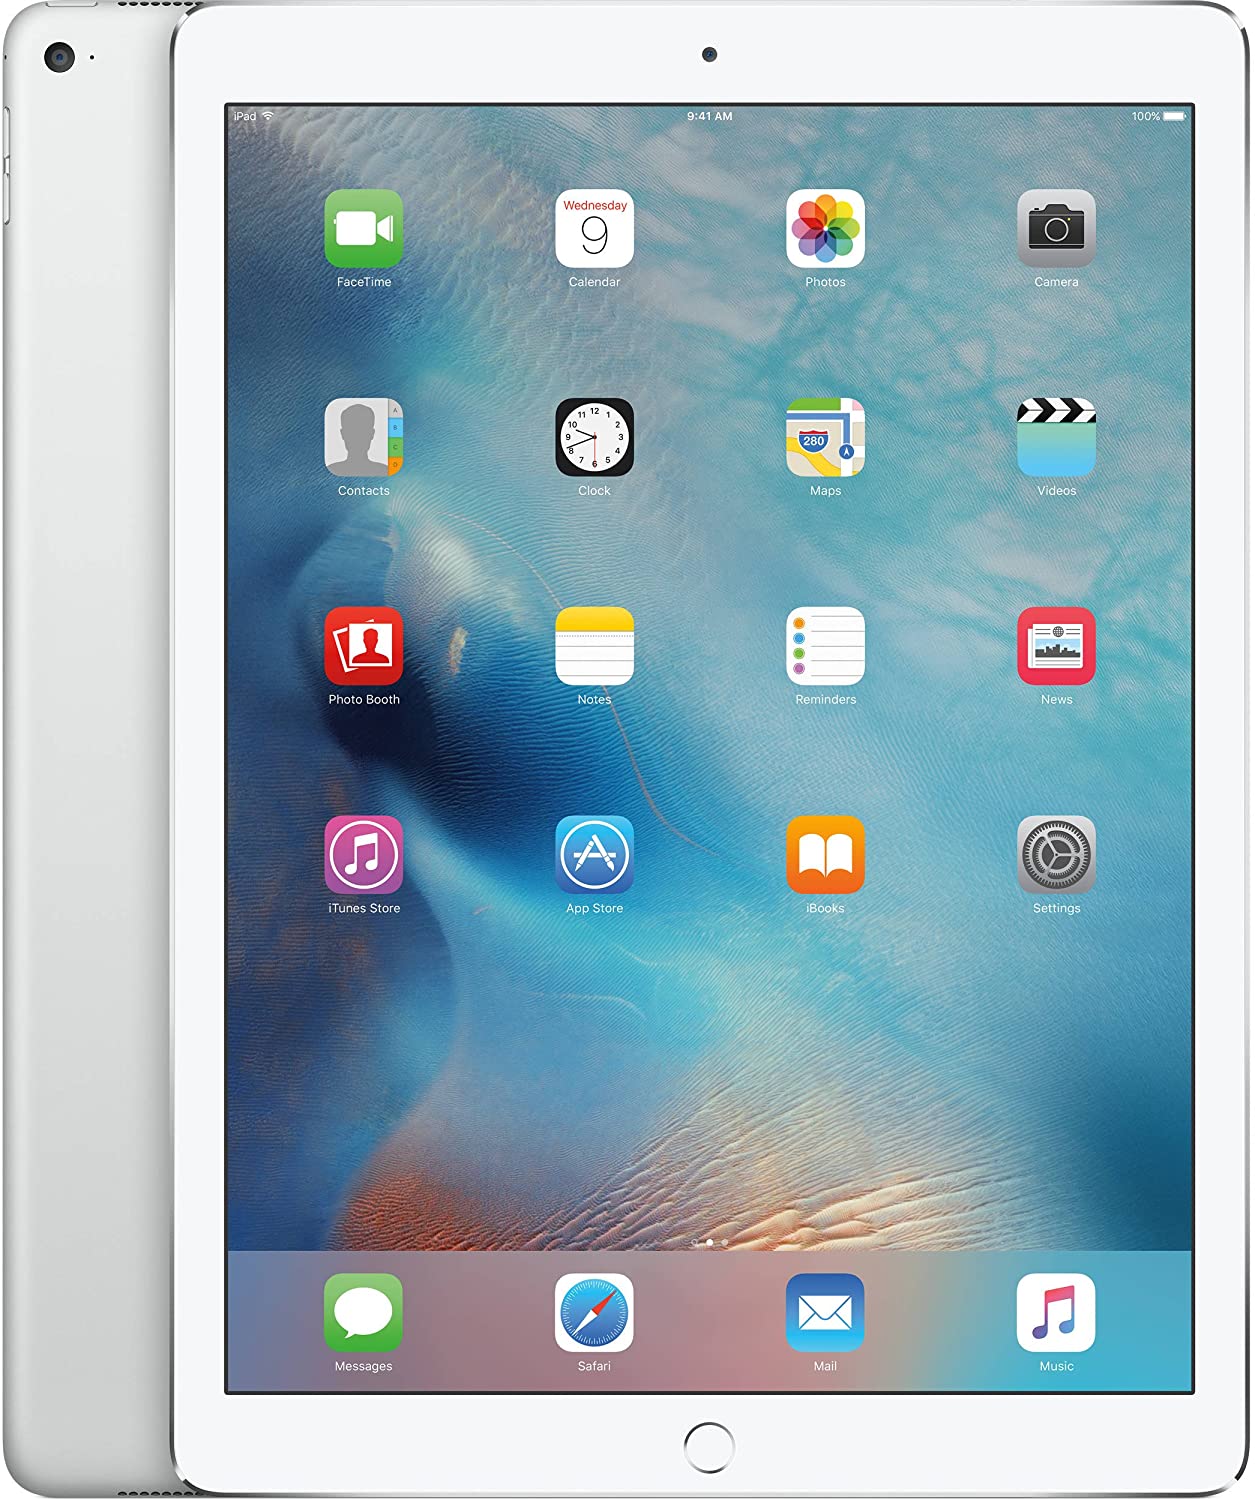 apple-2016-9.7-inch-ipad-pro-1-a1673-silver/white-1